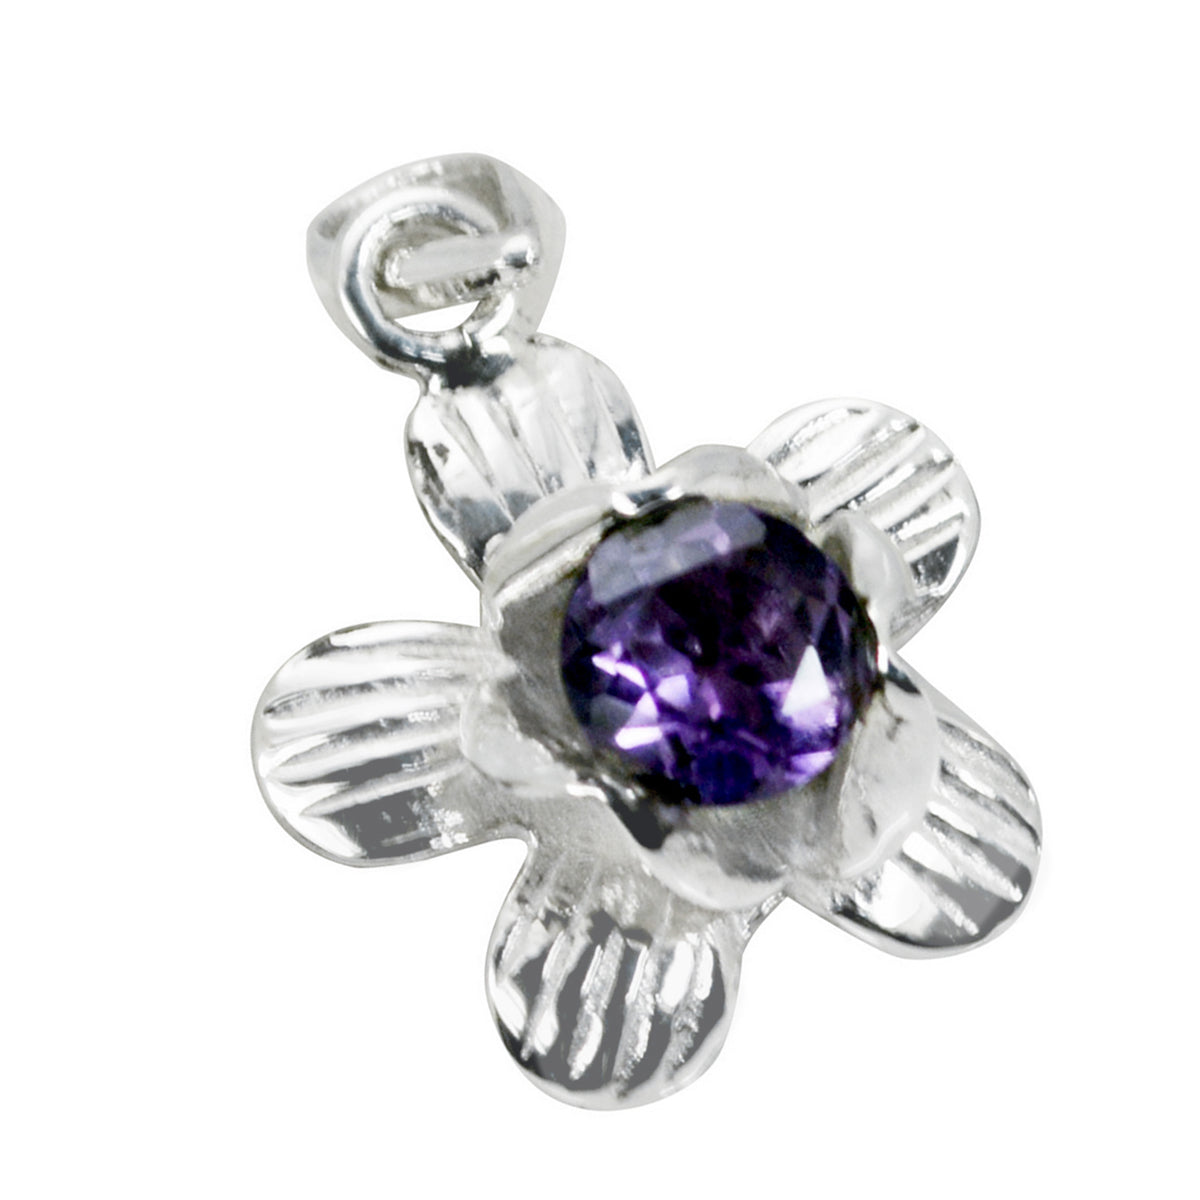 Riyo Ravishing Gemstone Round Faceted Purple Amethyst Sterling Silver Pendant Gift For Friend